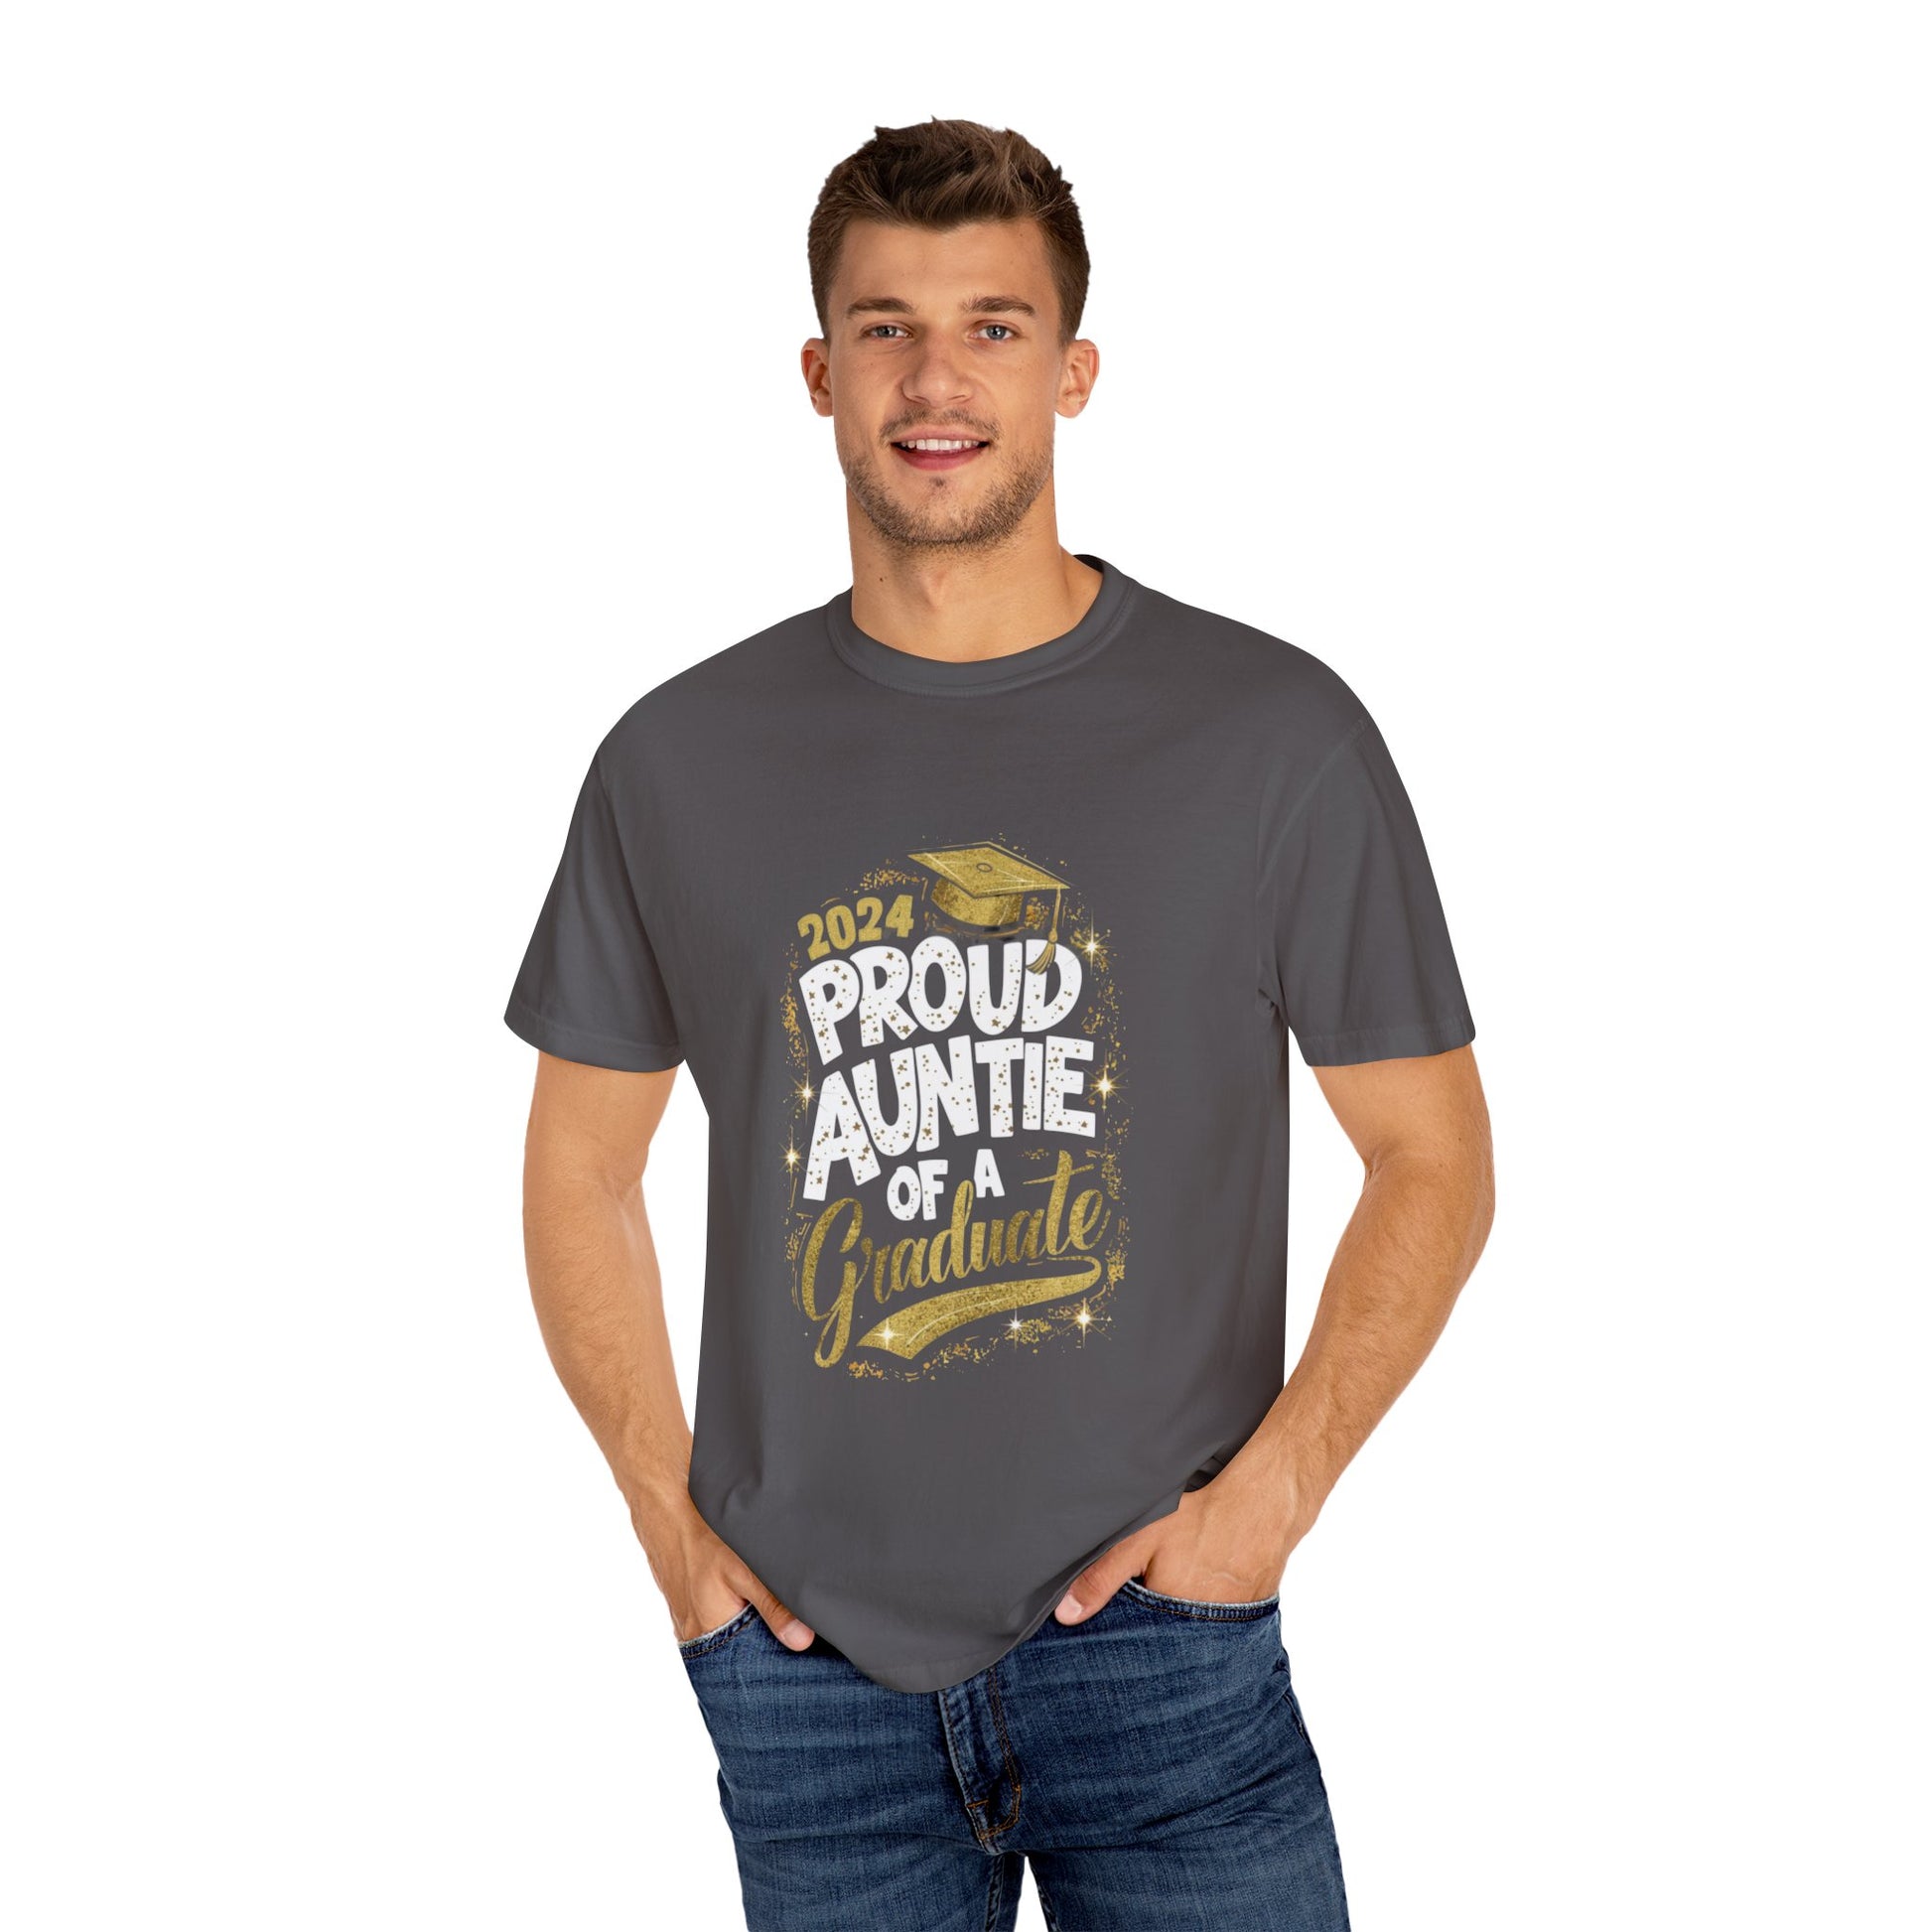 Proud Auntie of a 2024 Graduate Unisex Garment-dyed T-shirt Cotton Funny Humorous Graphic Soft Premium Unisex Men Women Graphite T-shirt Birthday Gift-39